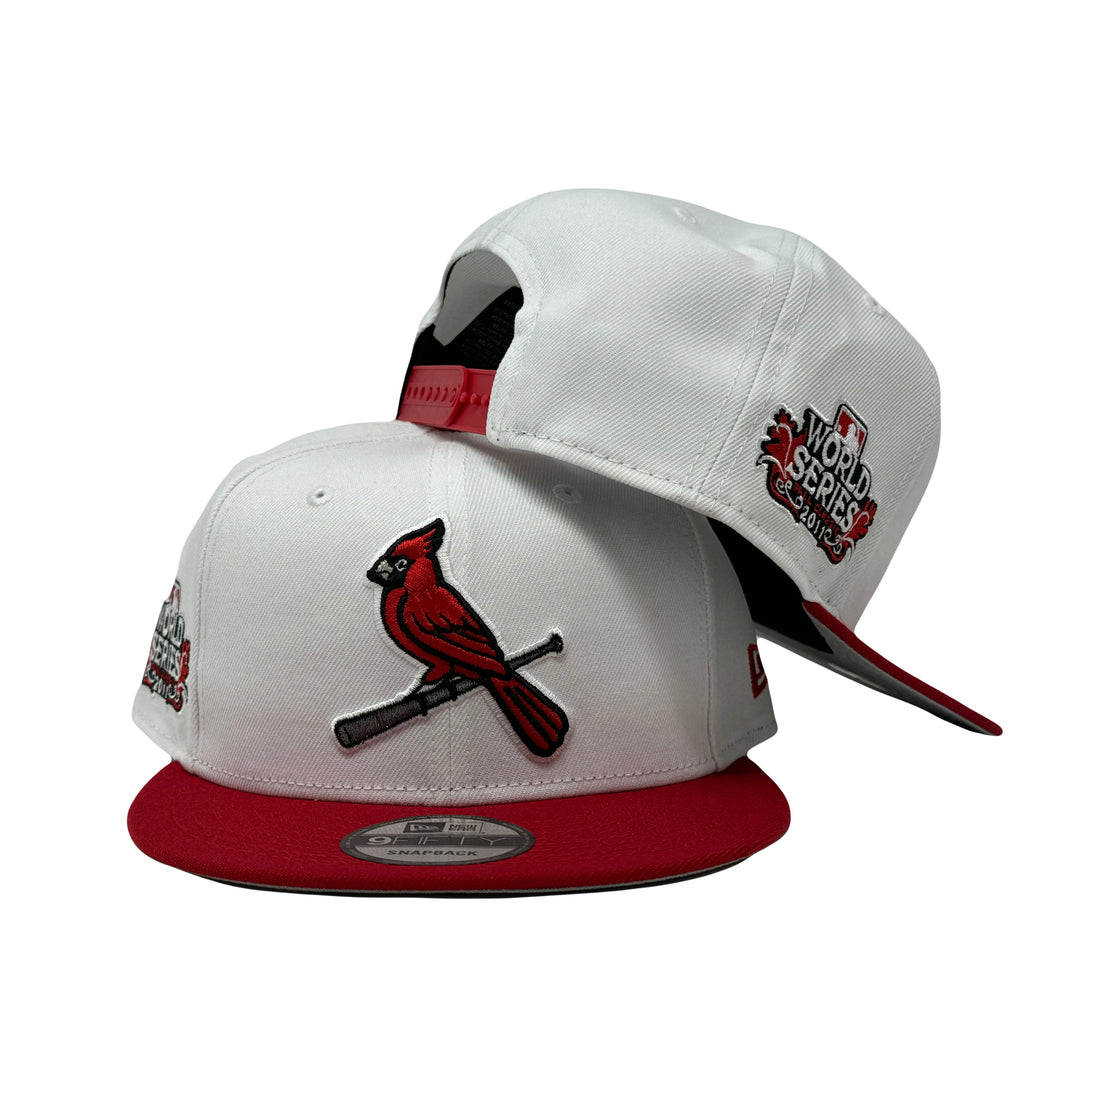 St. Louis Cardinals 2011 World Serie New Era Snapback Hat